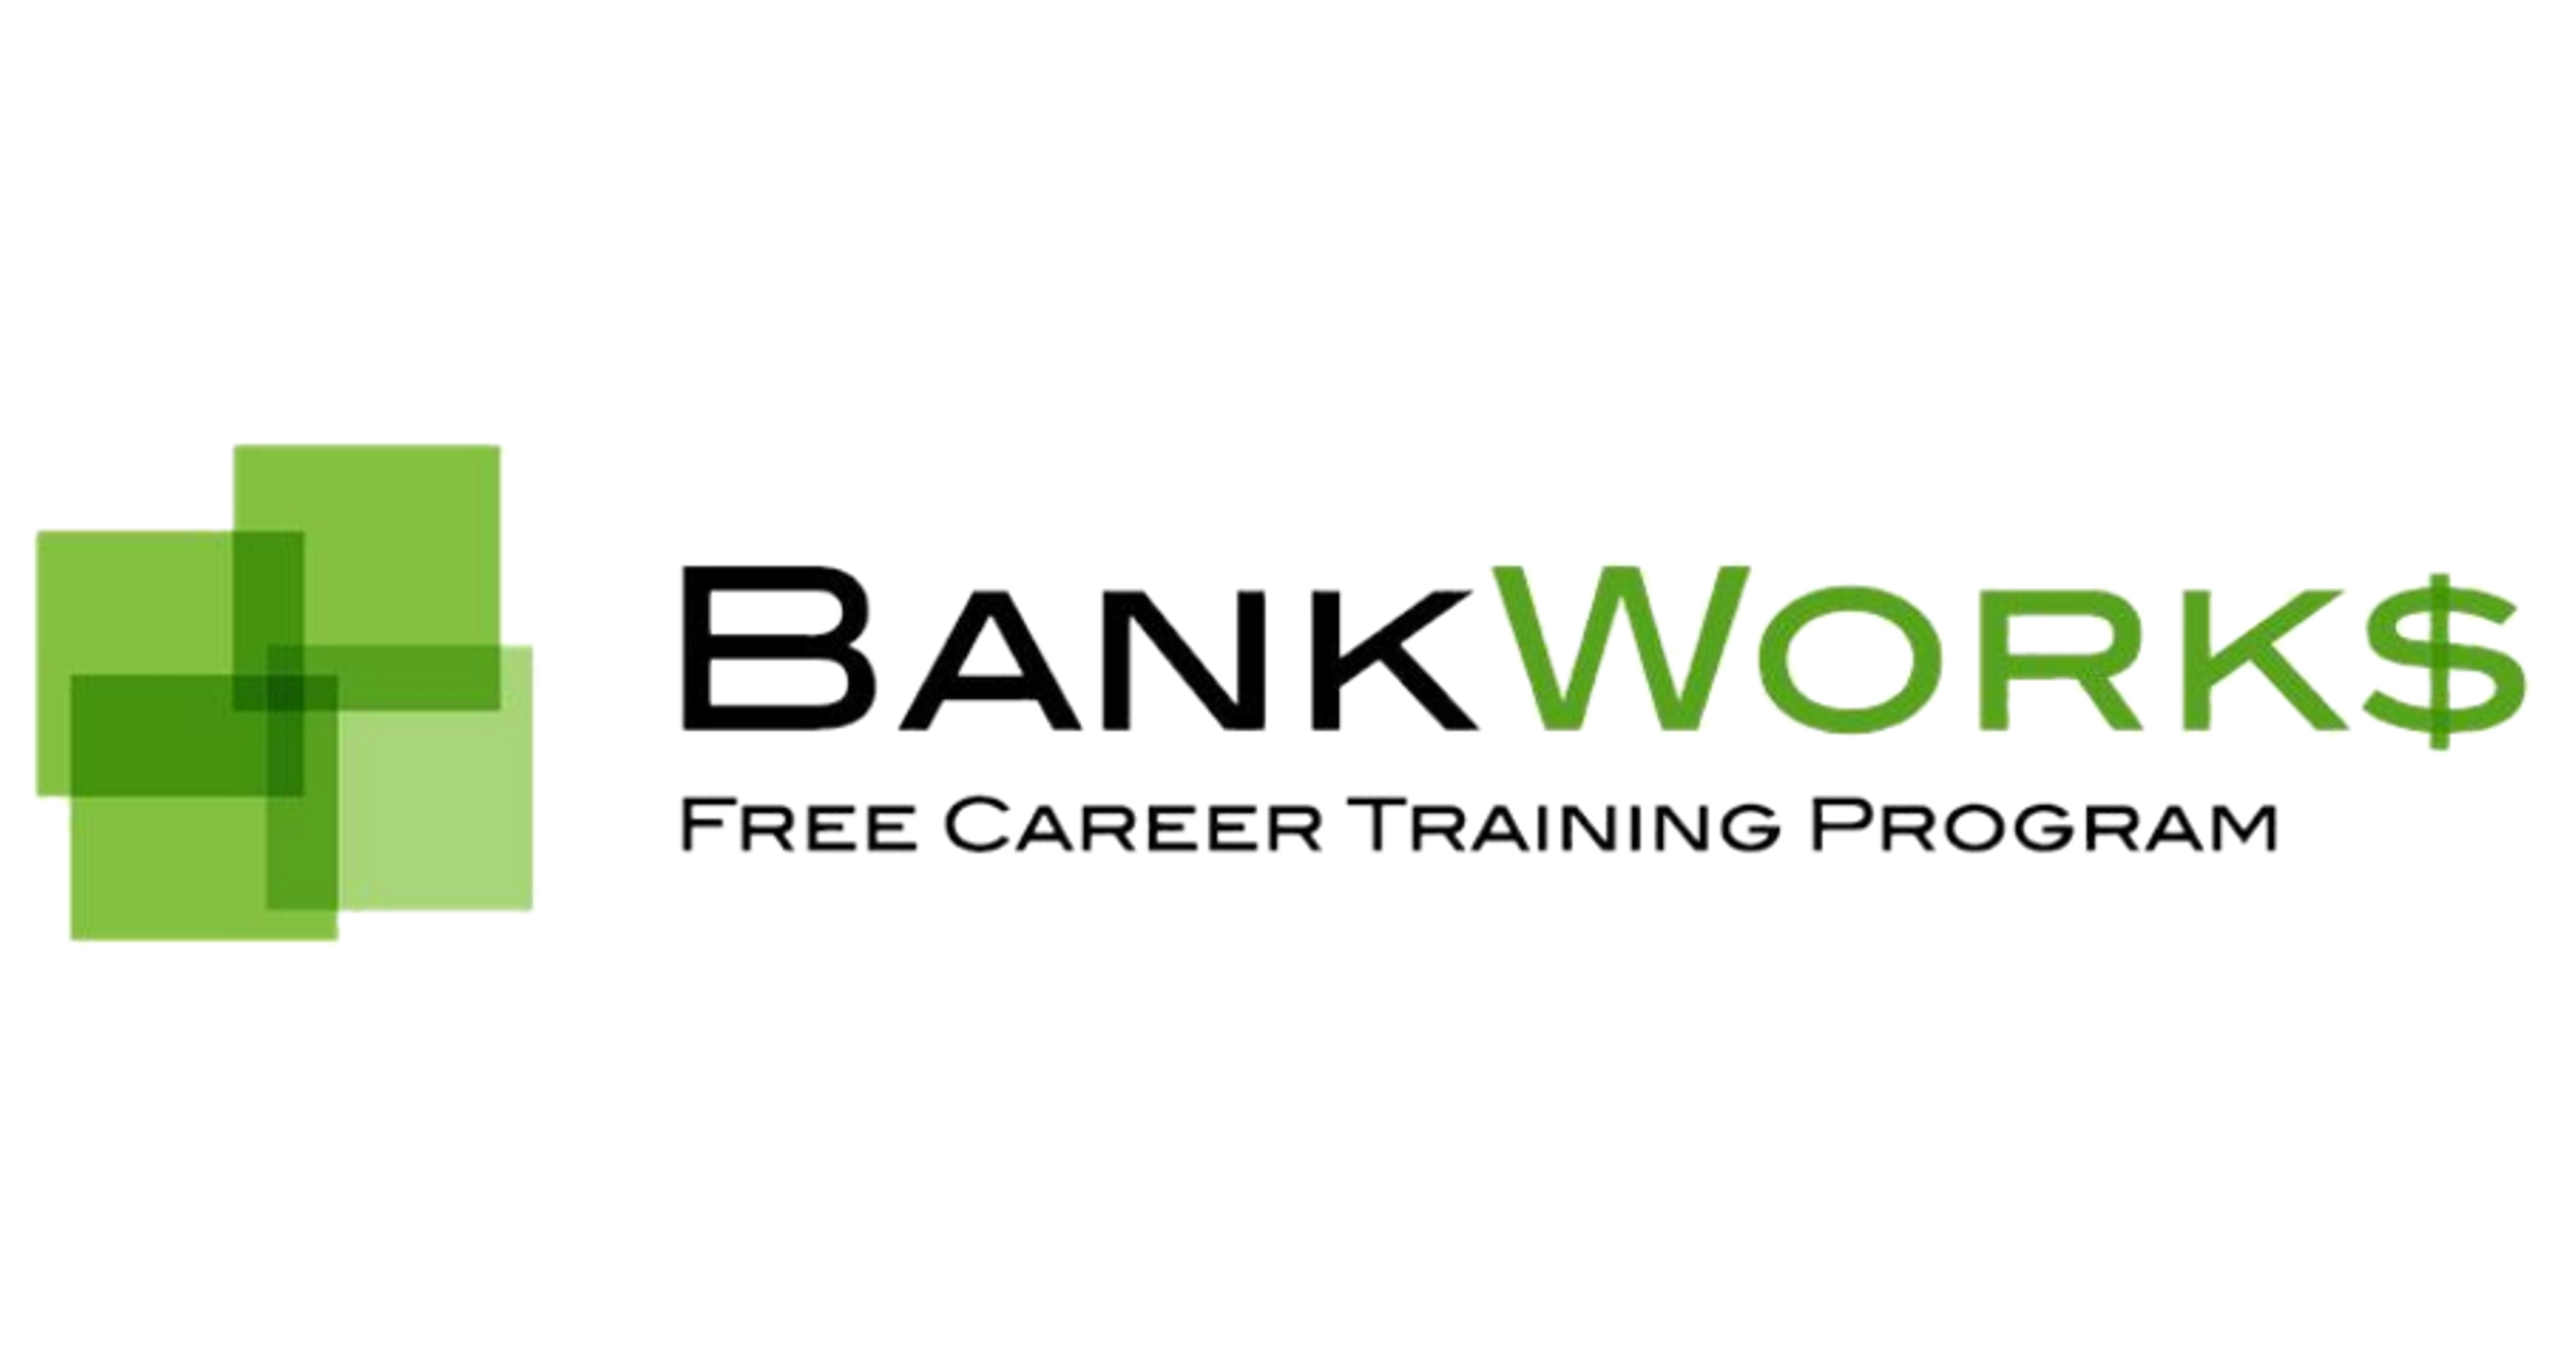 BankWorks